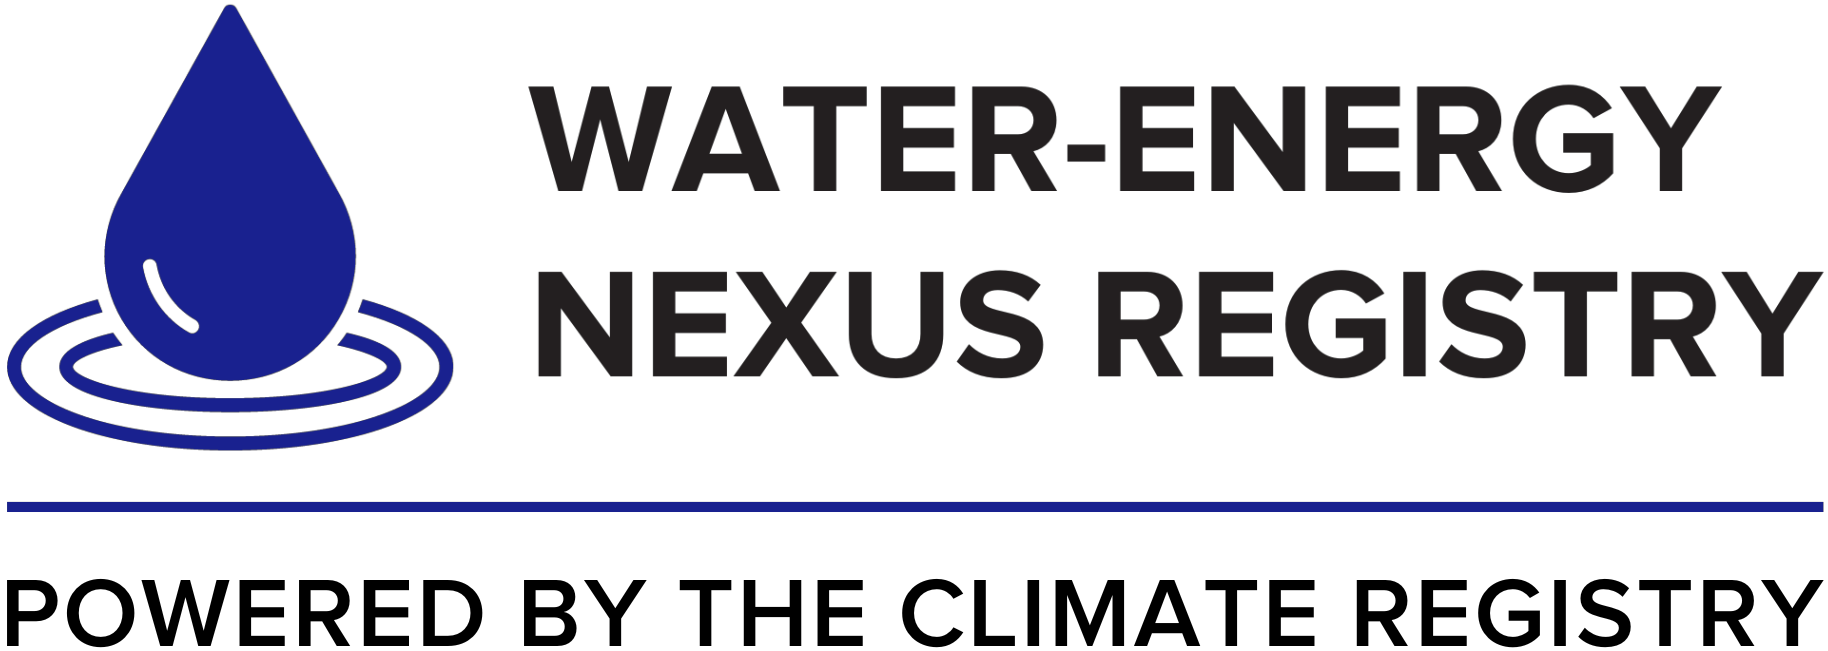 Join the Water-Energy Nexus Registry